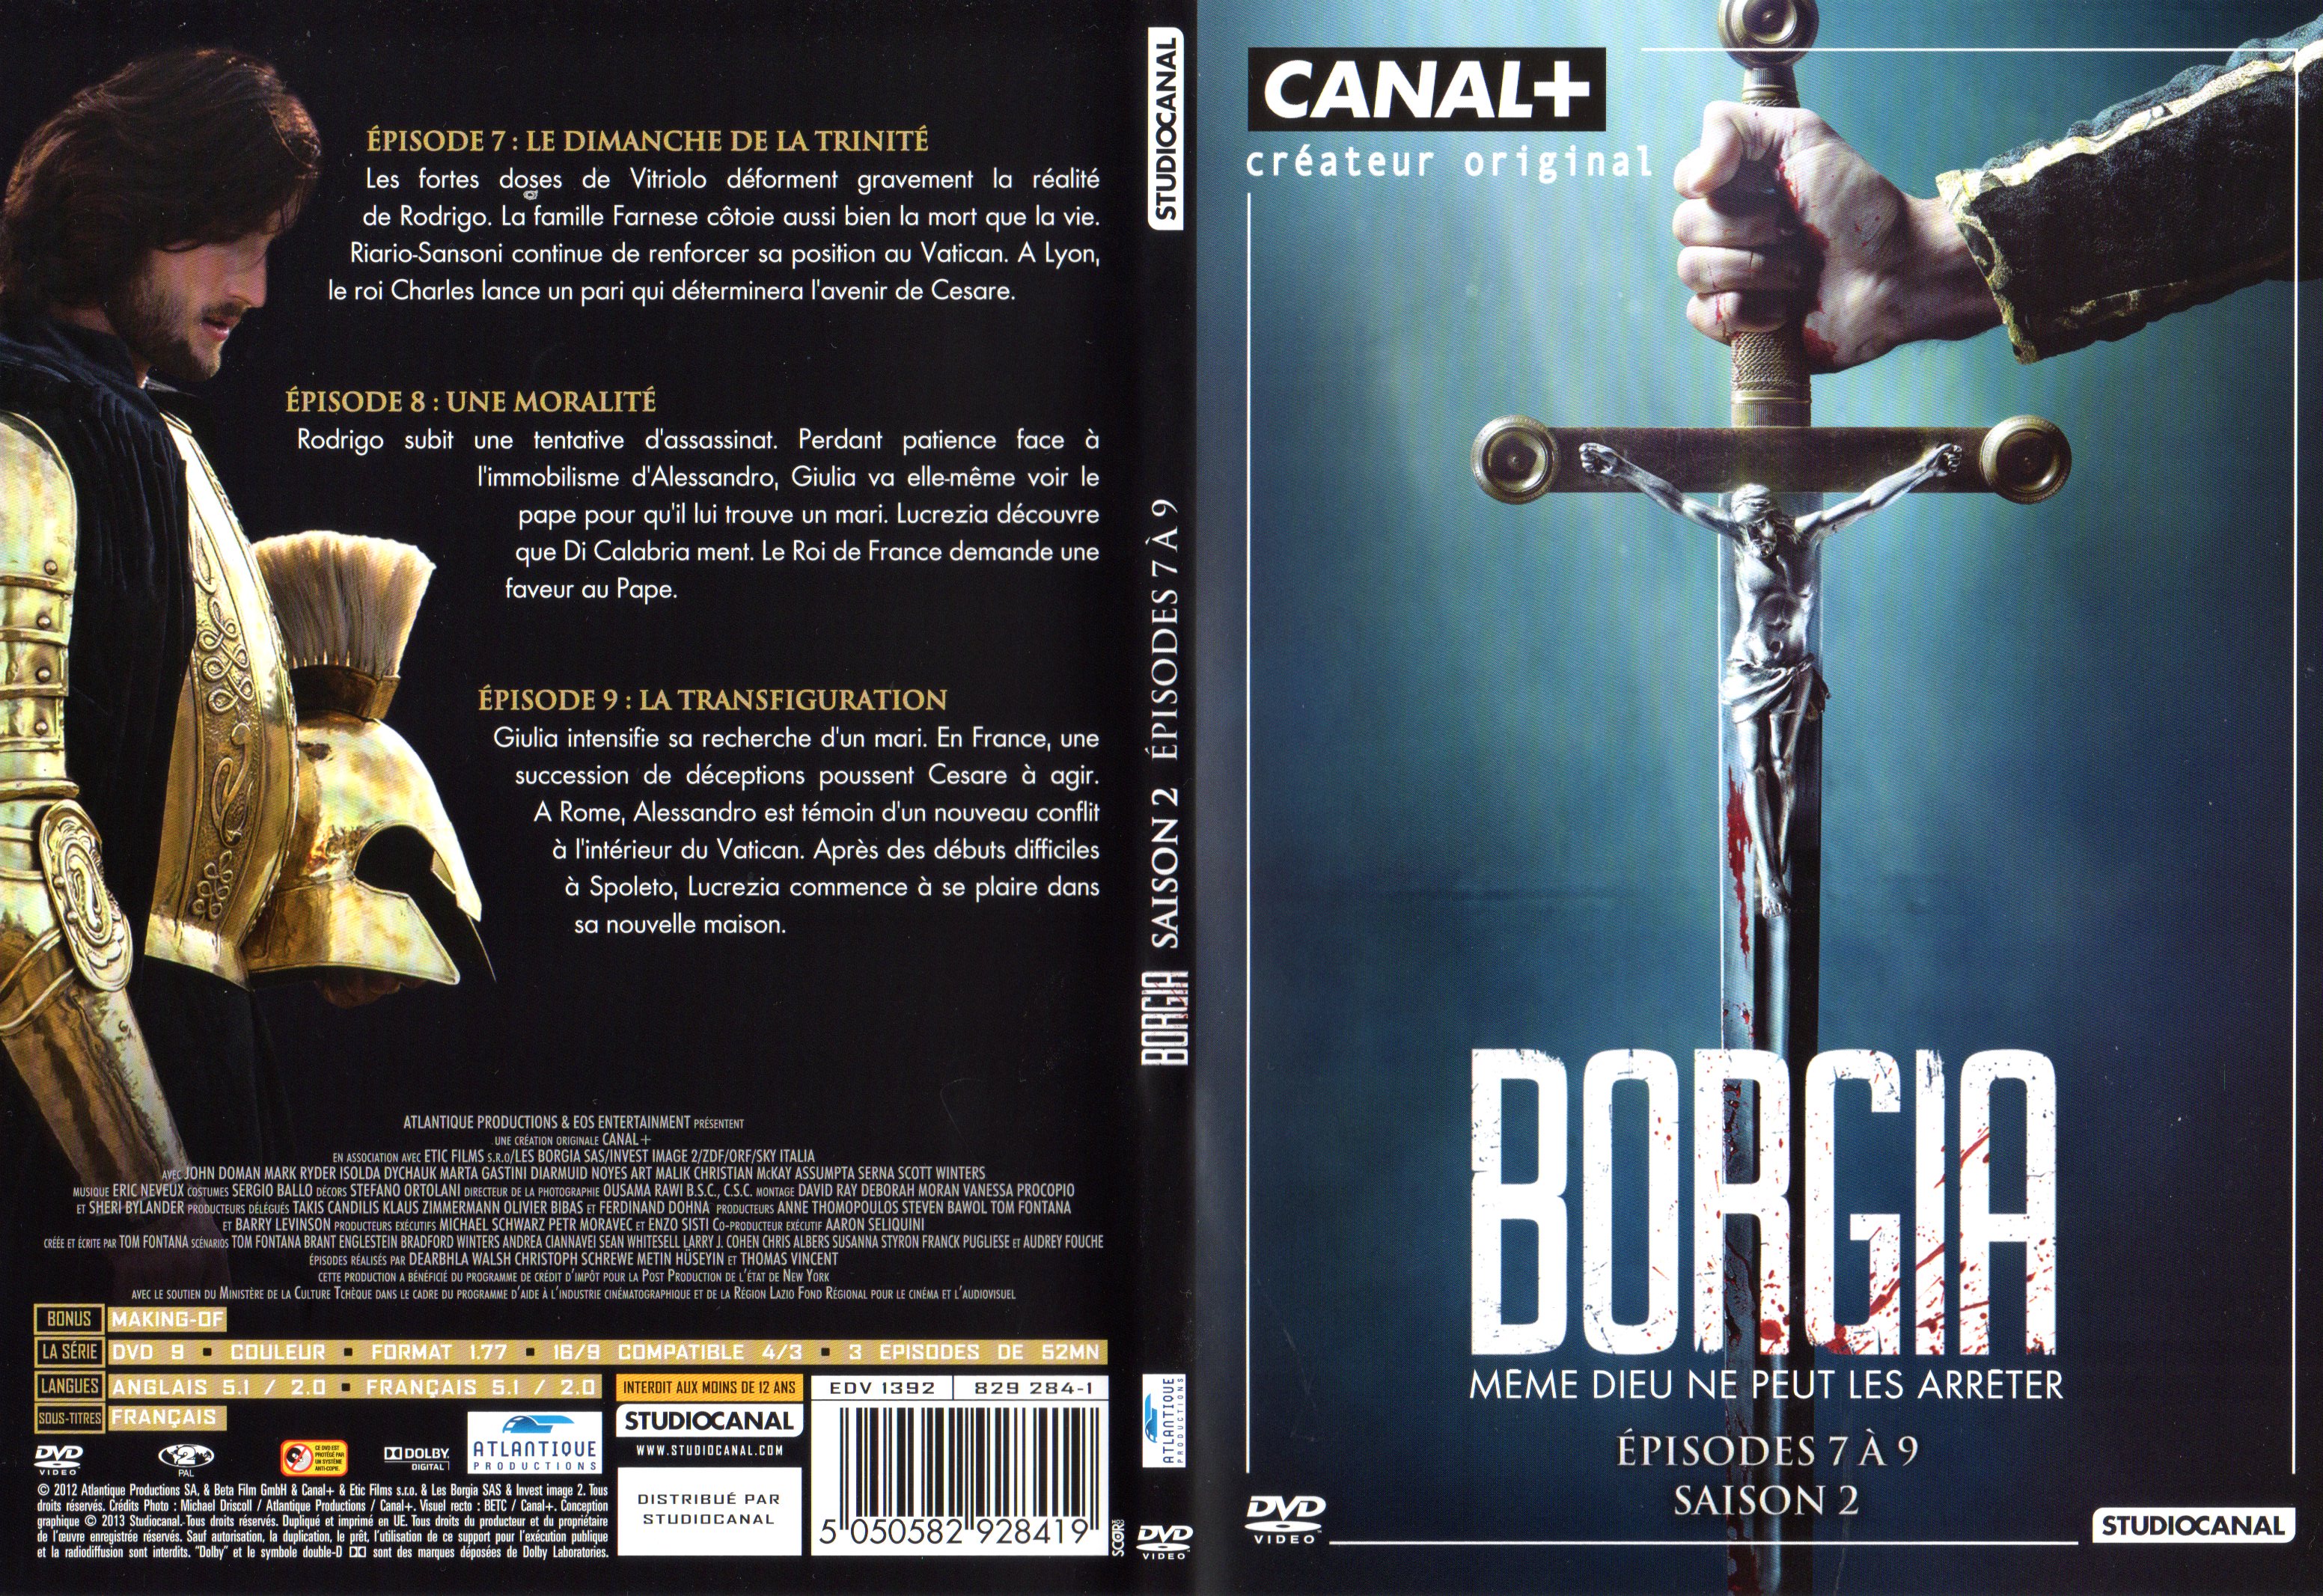 Jaquette DVD Borgia Saison 2 DVD 3